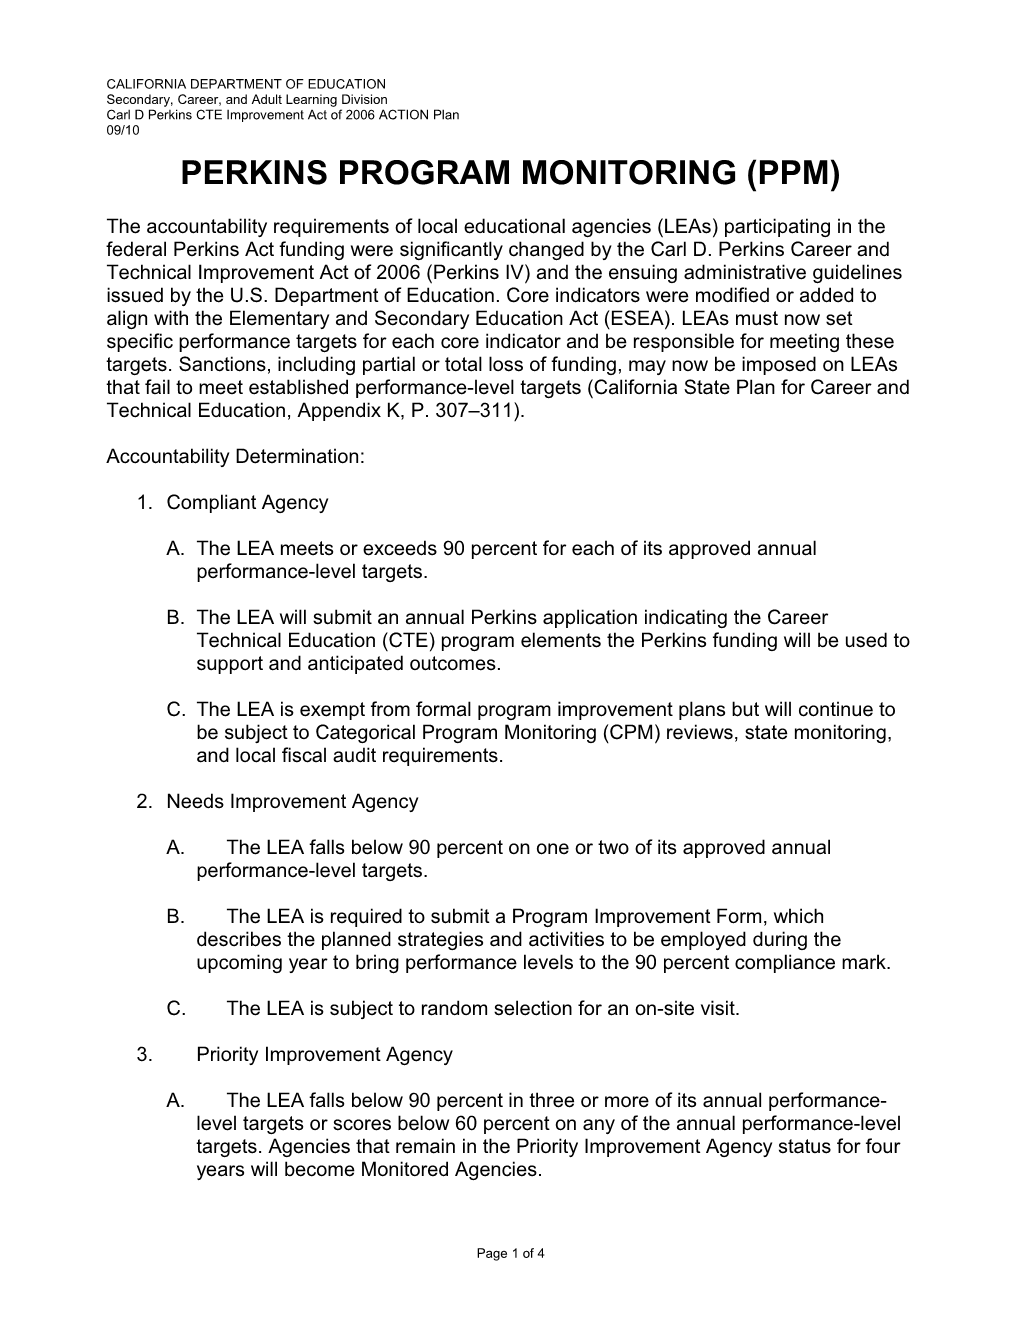 Perkins Program Monitoring (PPM) - Perkins (CA Dept of Education)